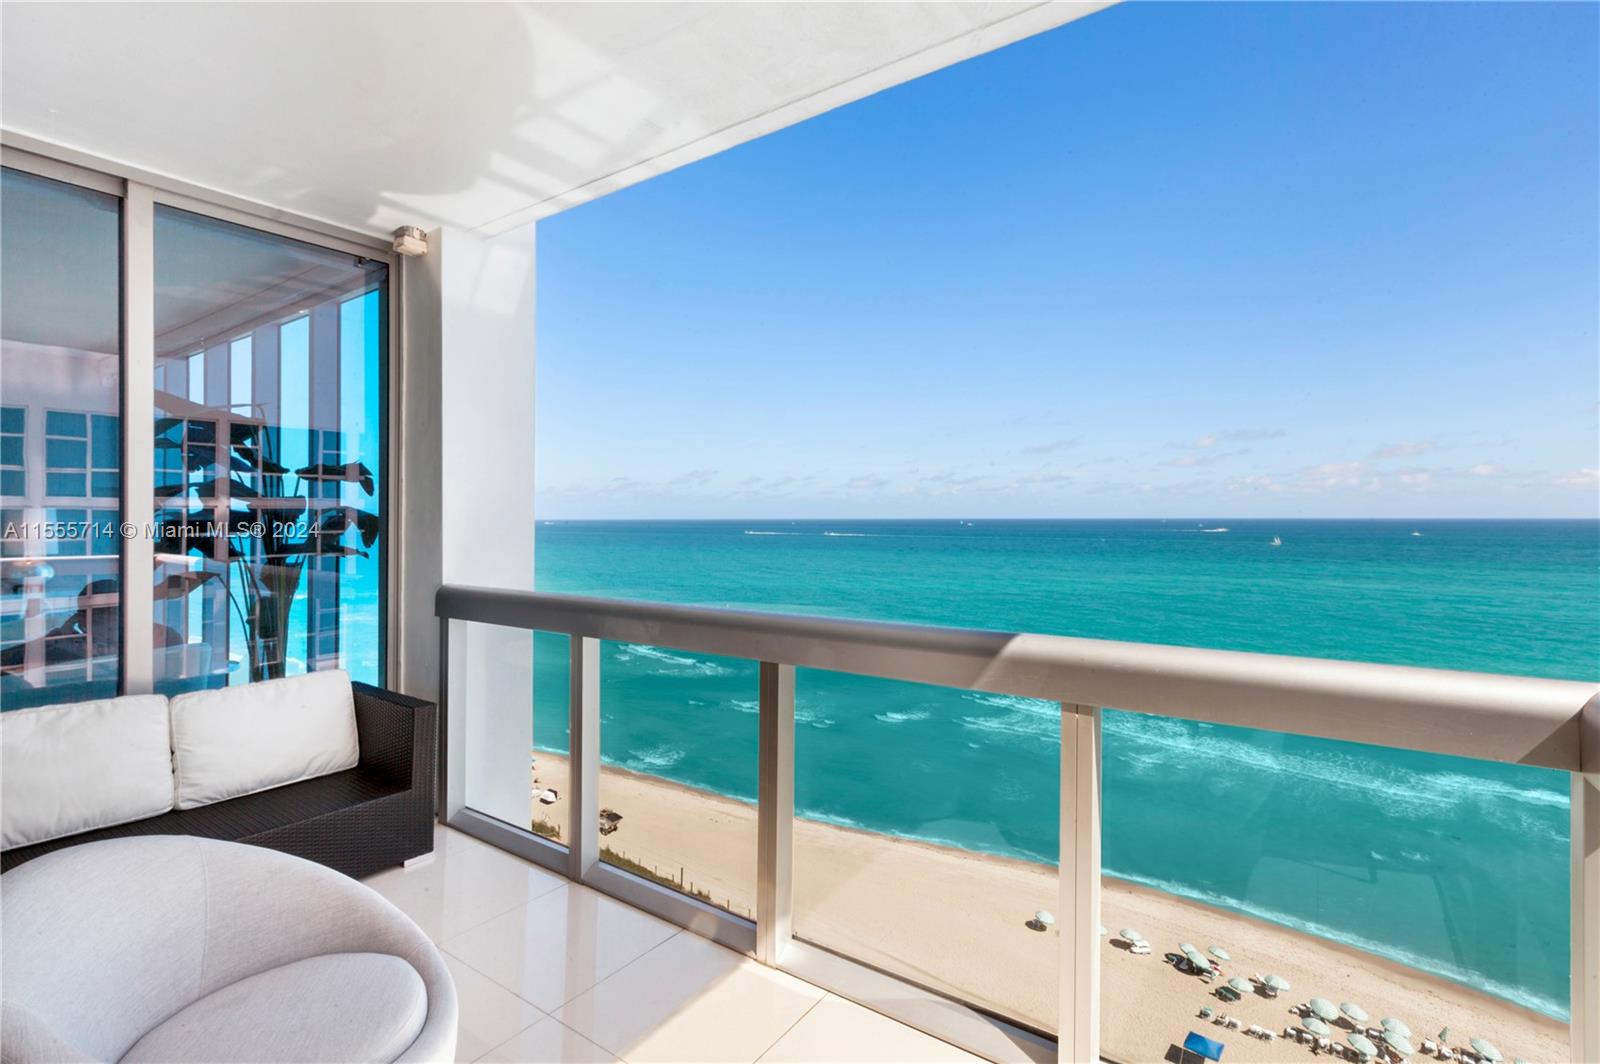 Rental Property at 6899 Collins Ave 1508, Miami Beach, Miami-Dade County, Florida - Bedrooms: 2 
Bathrooms: 2  - $8,500 MO.